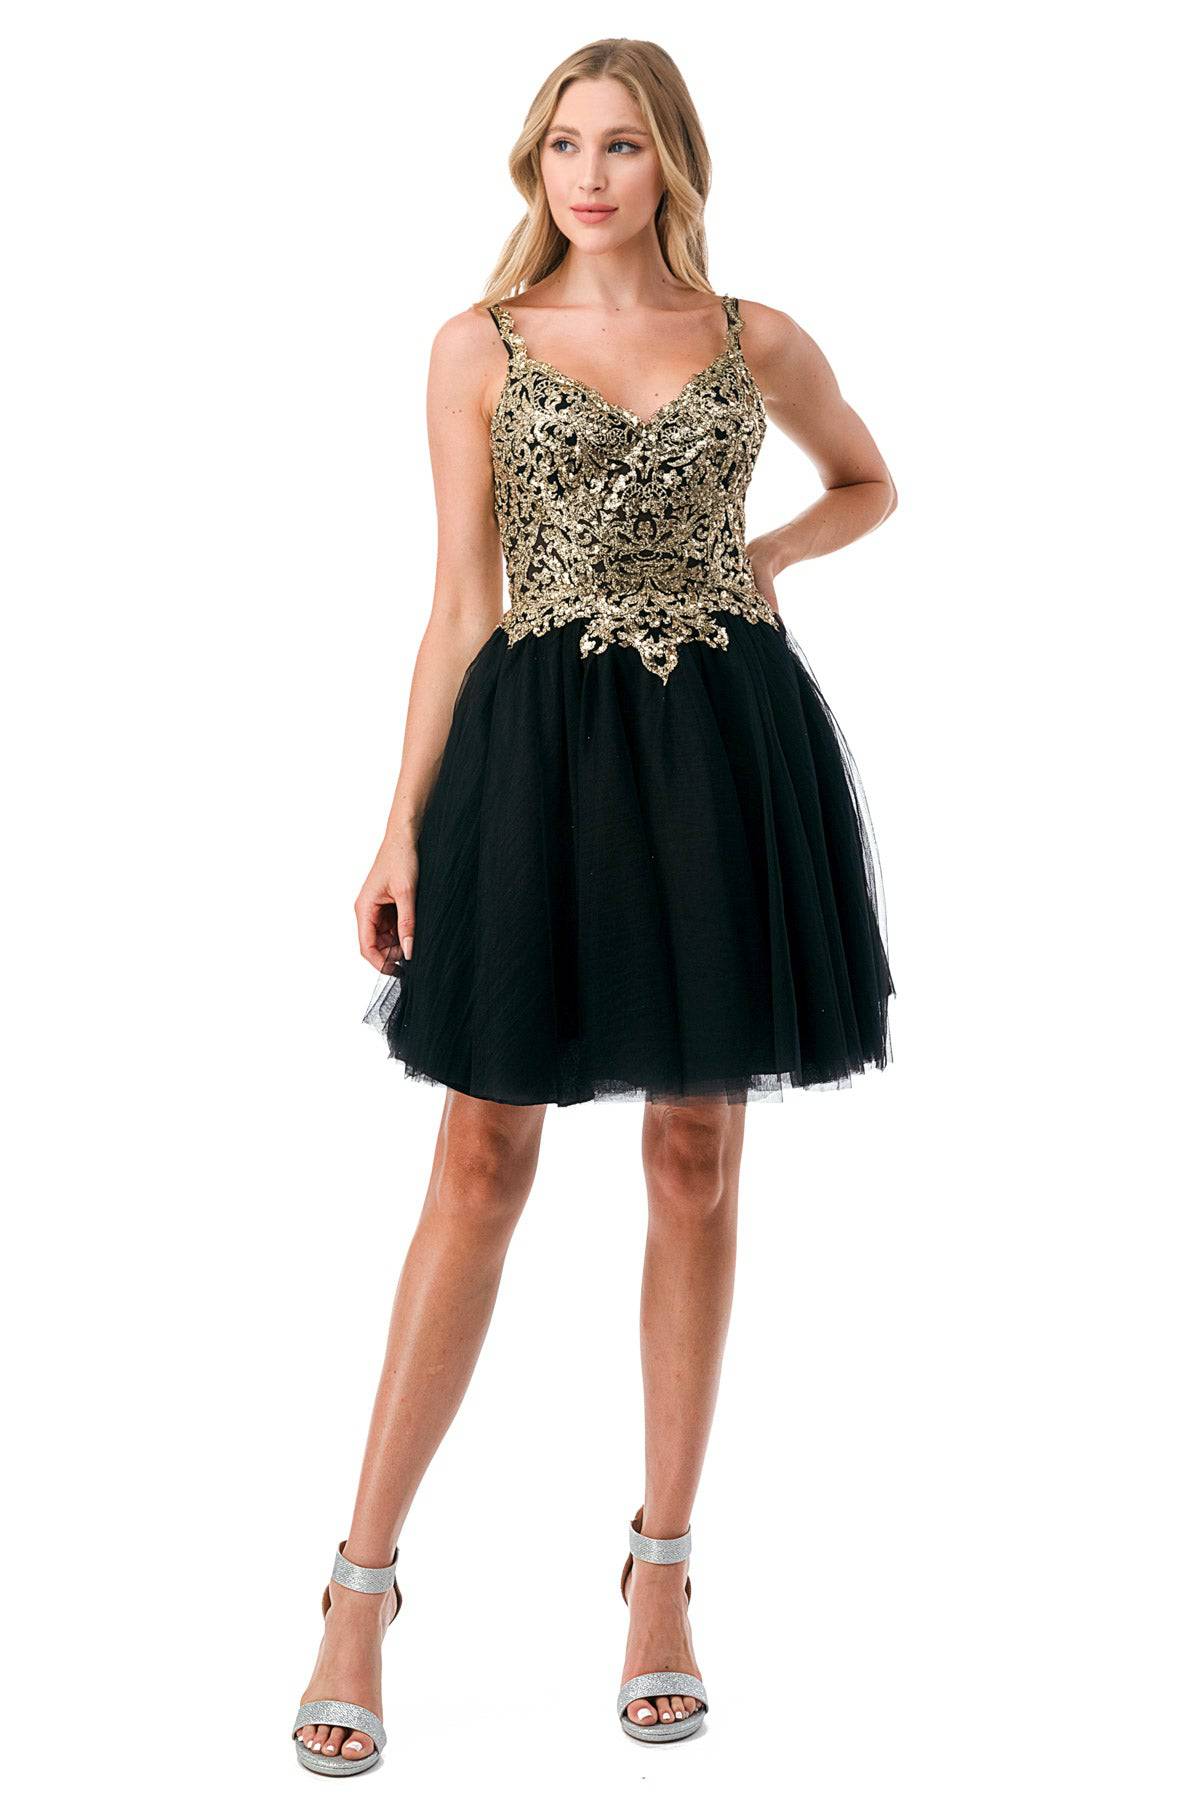 Aspeed S2757J Black & Gold Floral Short Dress - NORMA REED